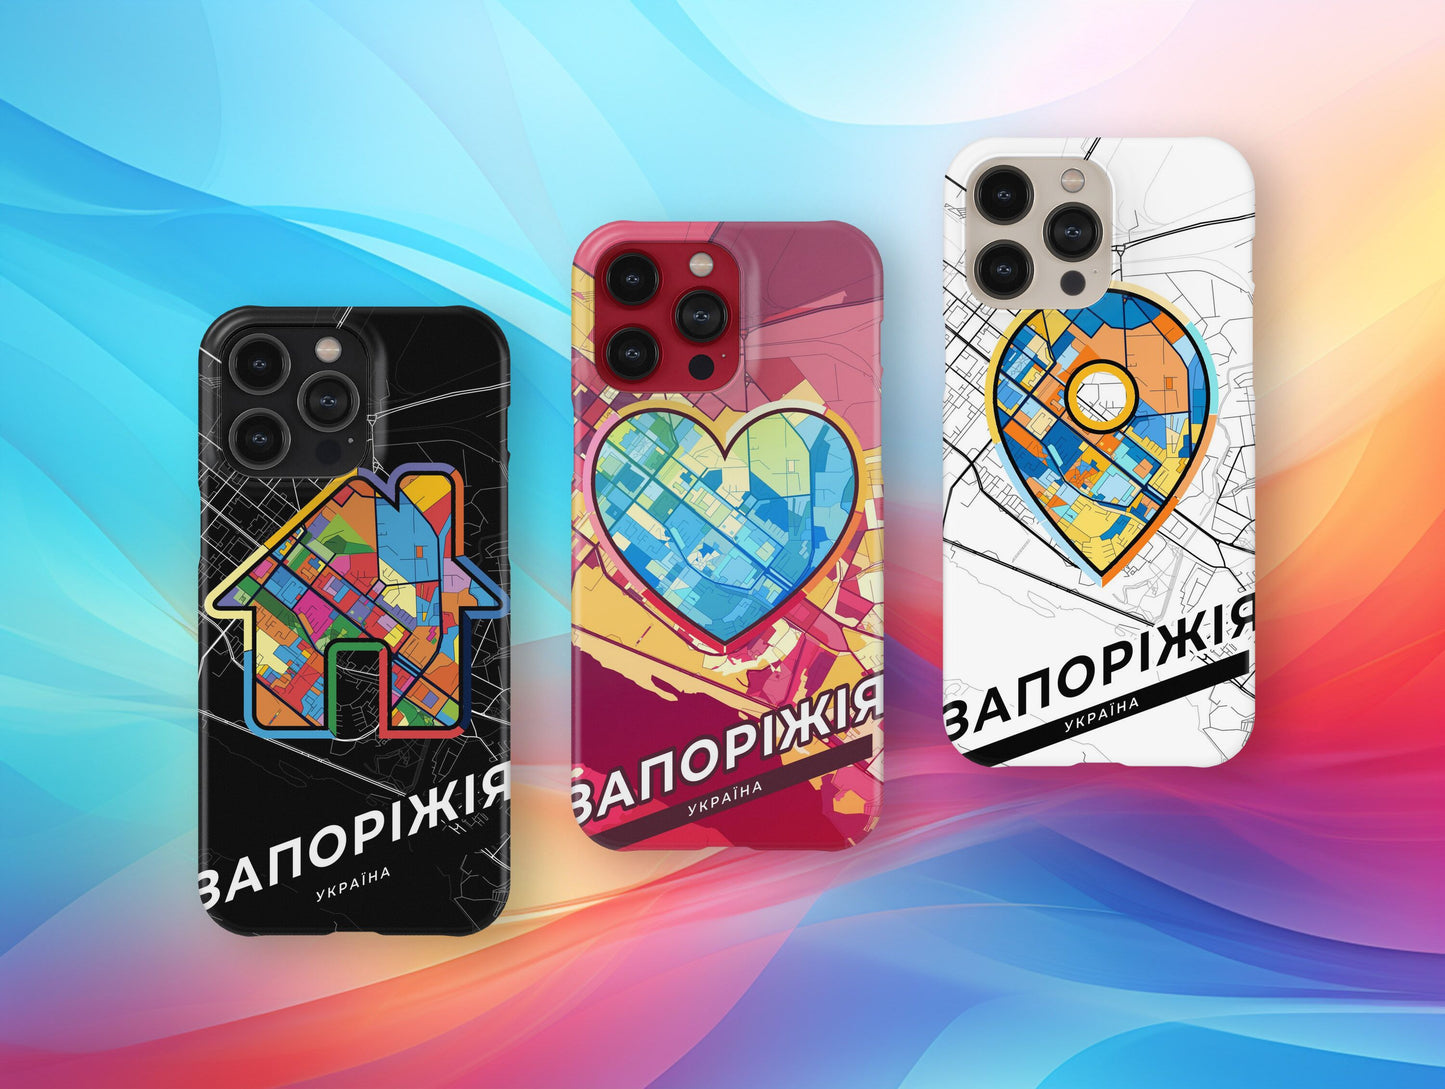 Zaporizhia Ukraine slim phone case with colorful icon